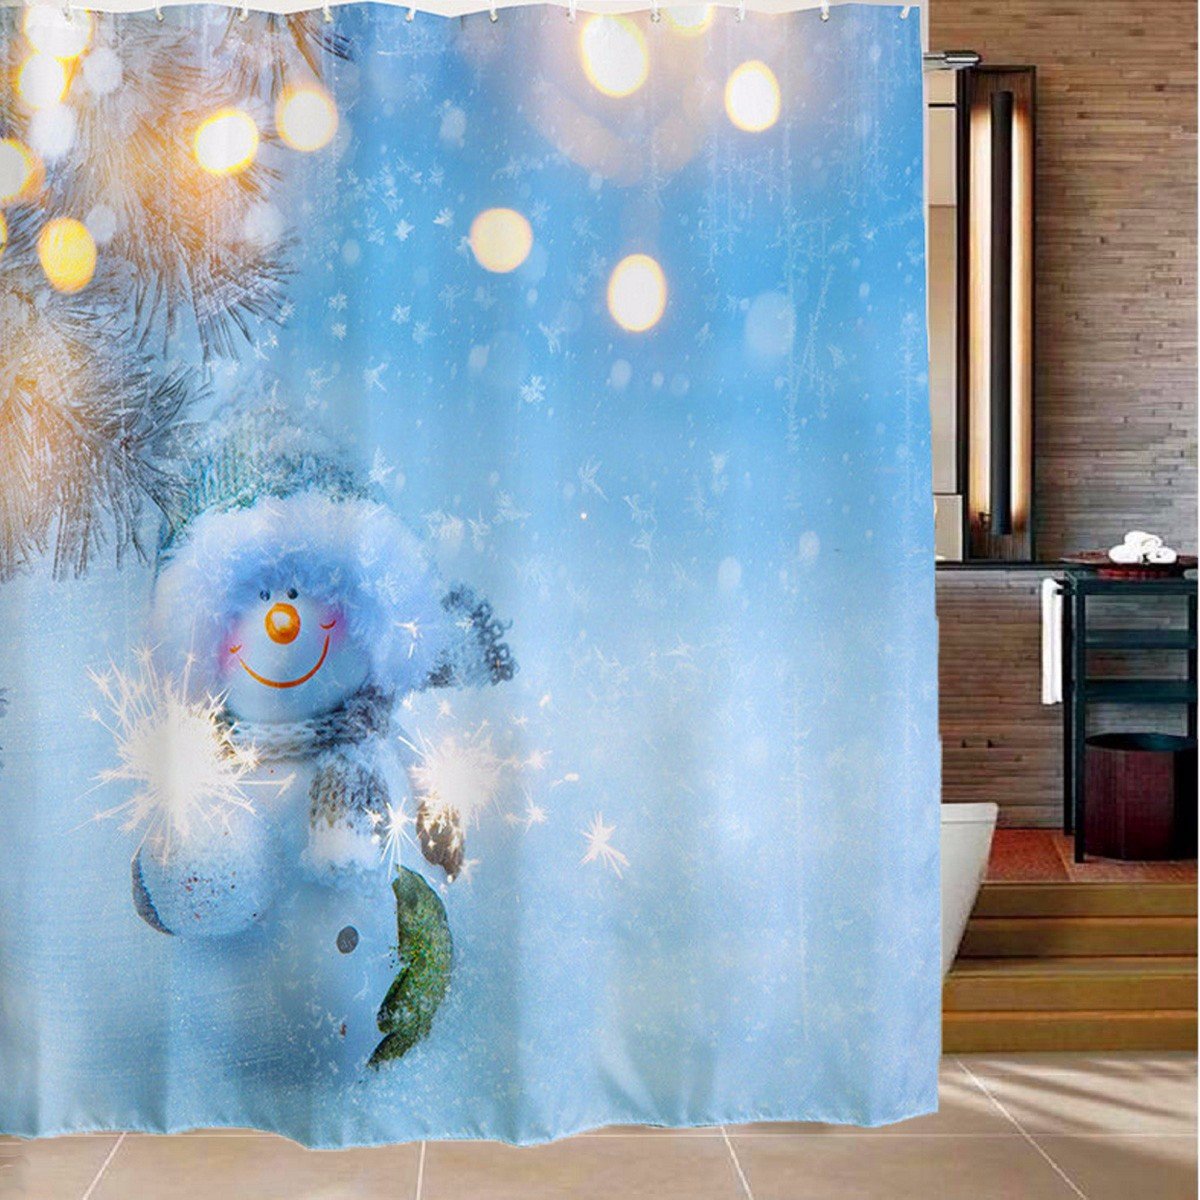 180x180cm Snowman Pattern Waterproof Polyester Shower Curtain Bathroom Decor with 12 Hooks